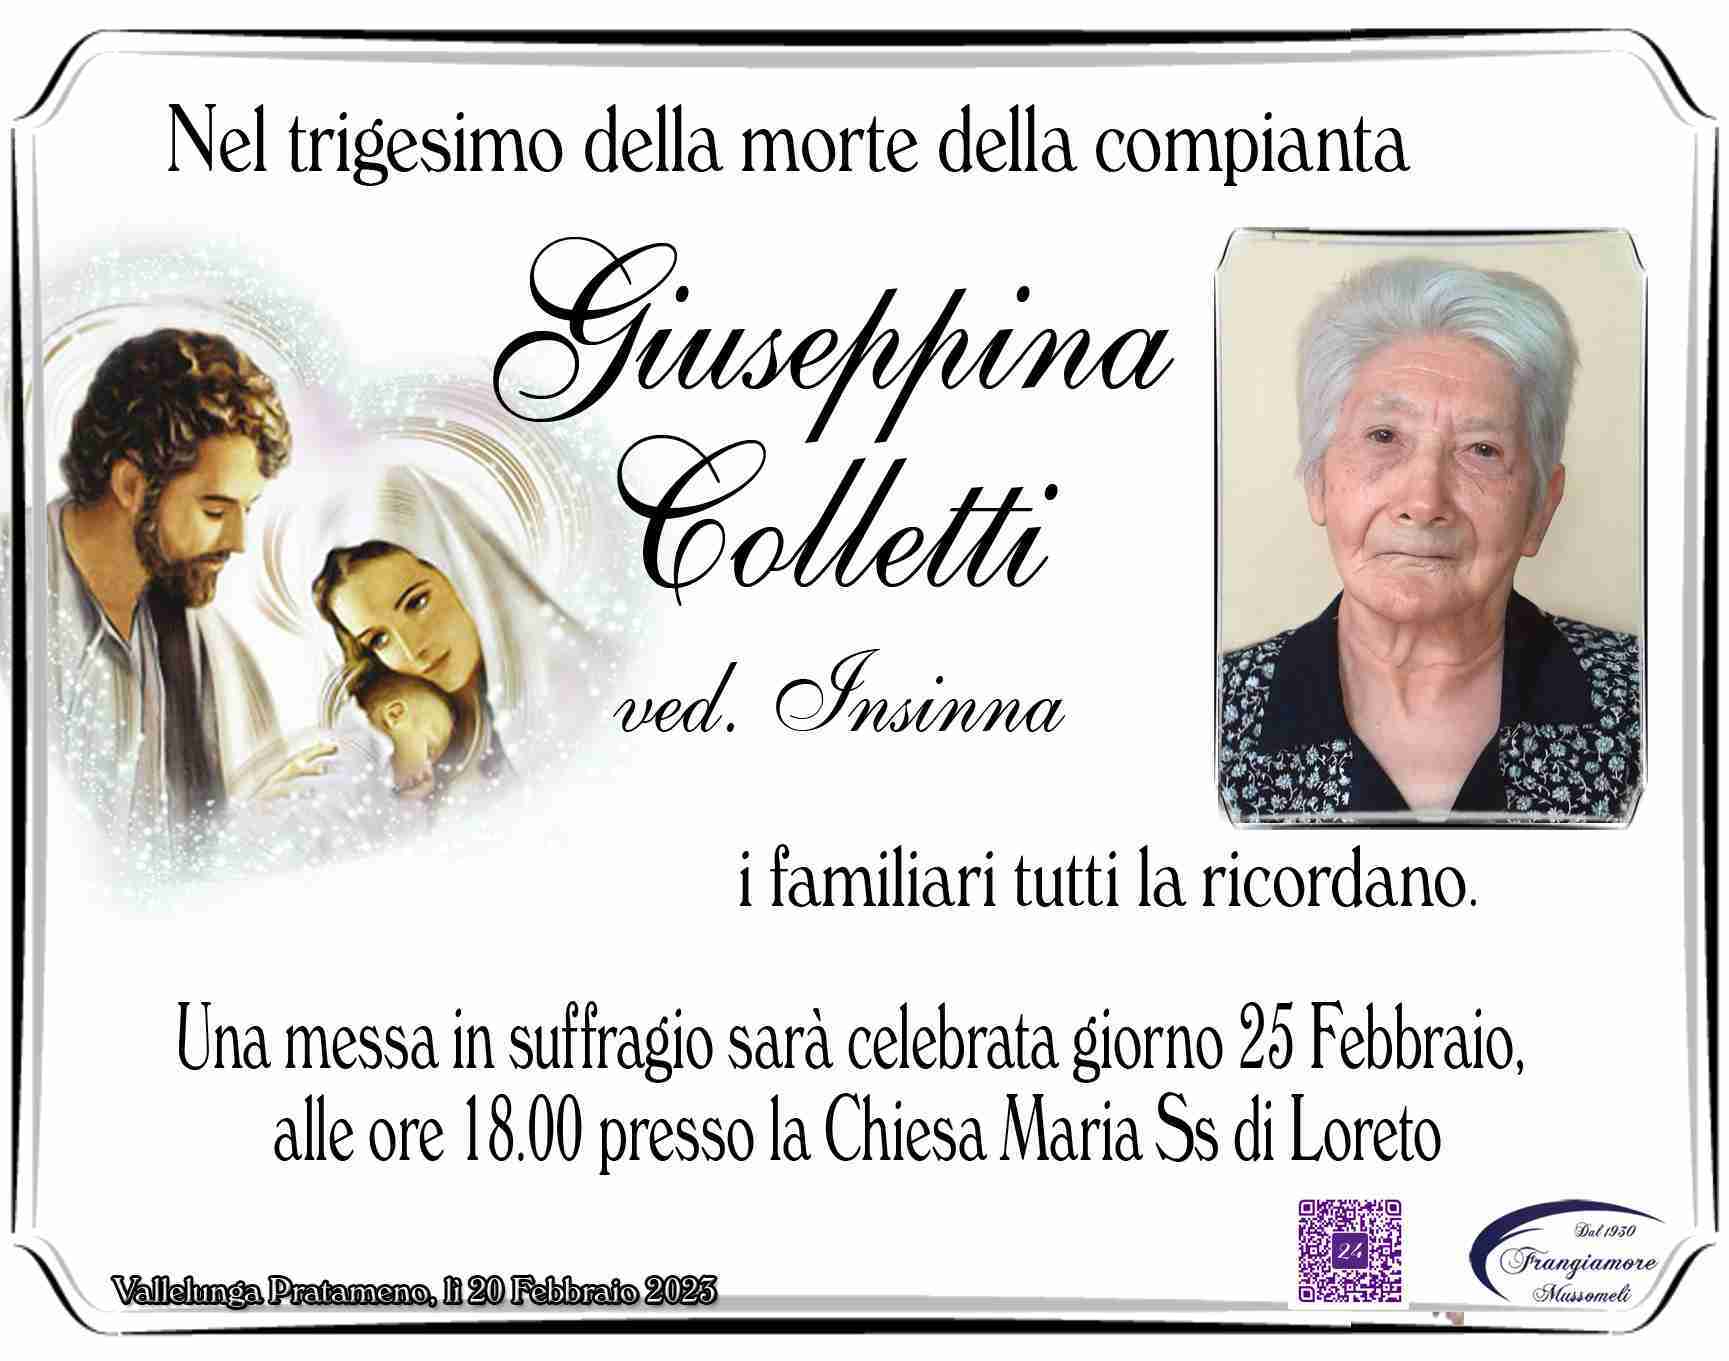 Giuseppina Colletti